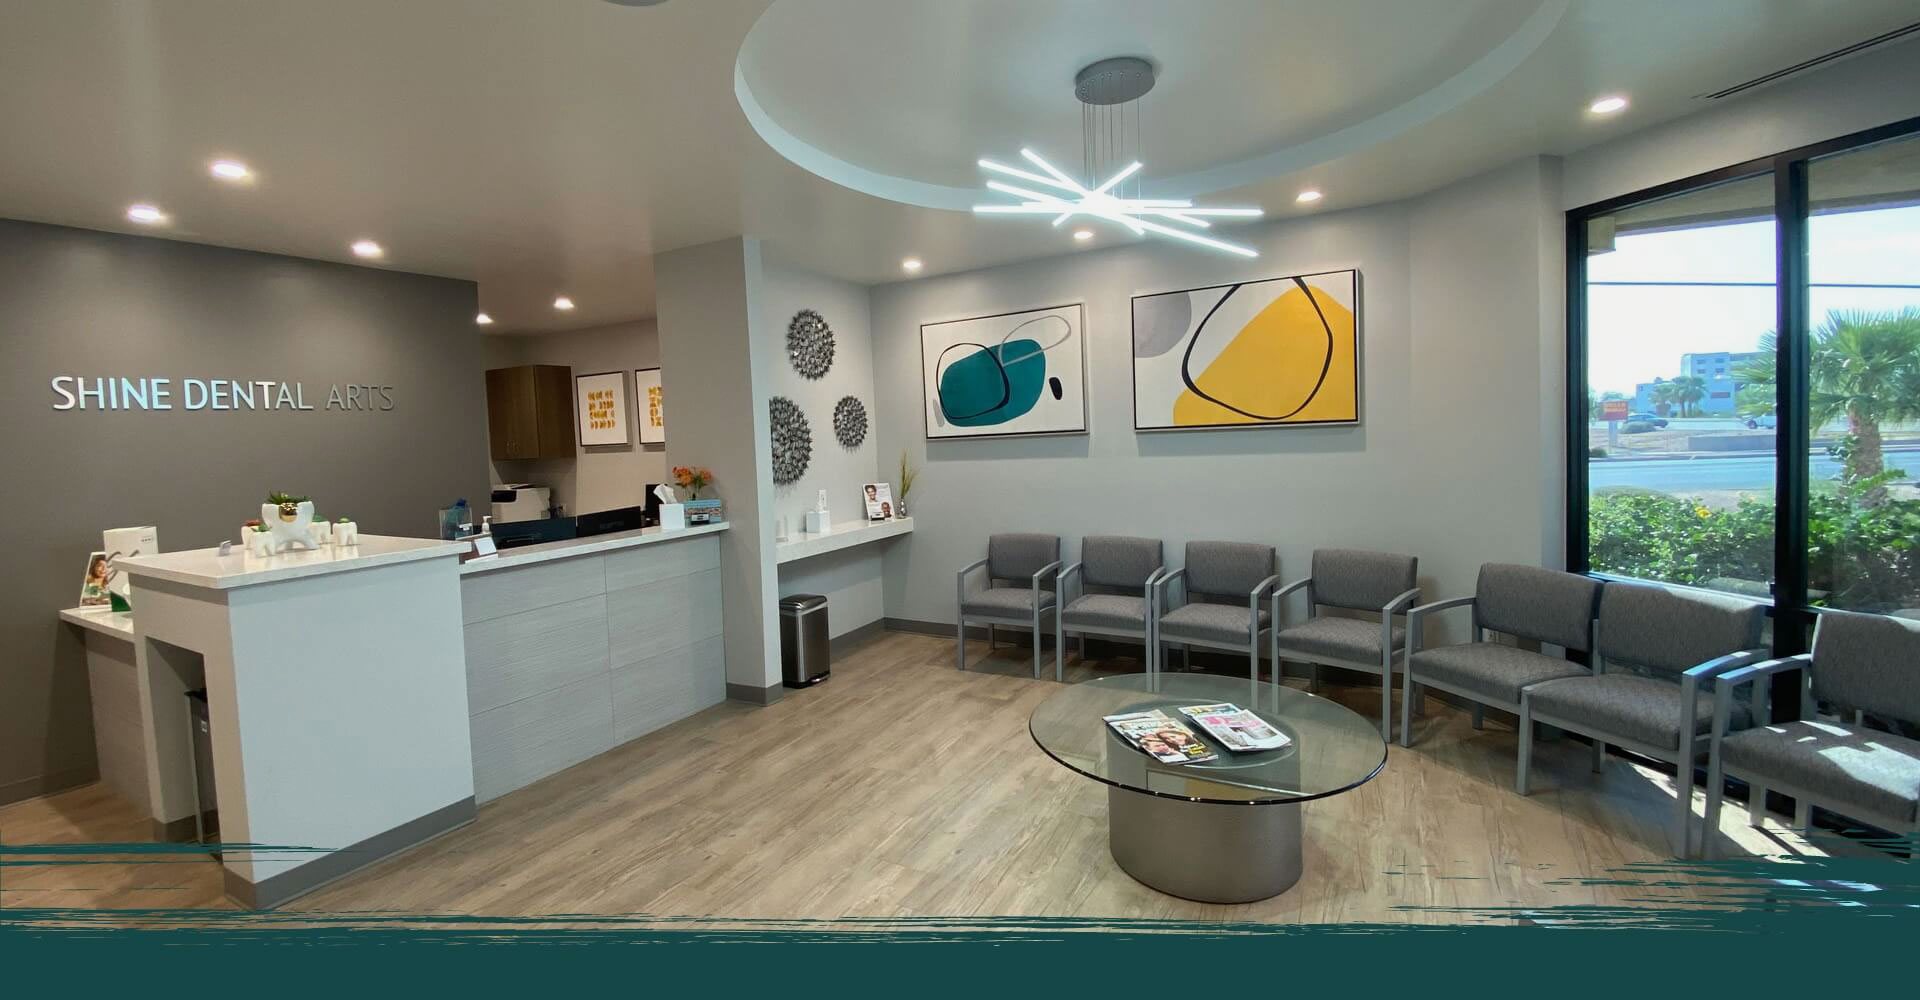 Shine Dental Arts, Phoenix, AZ Reception Area